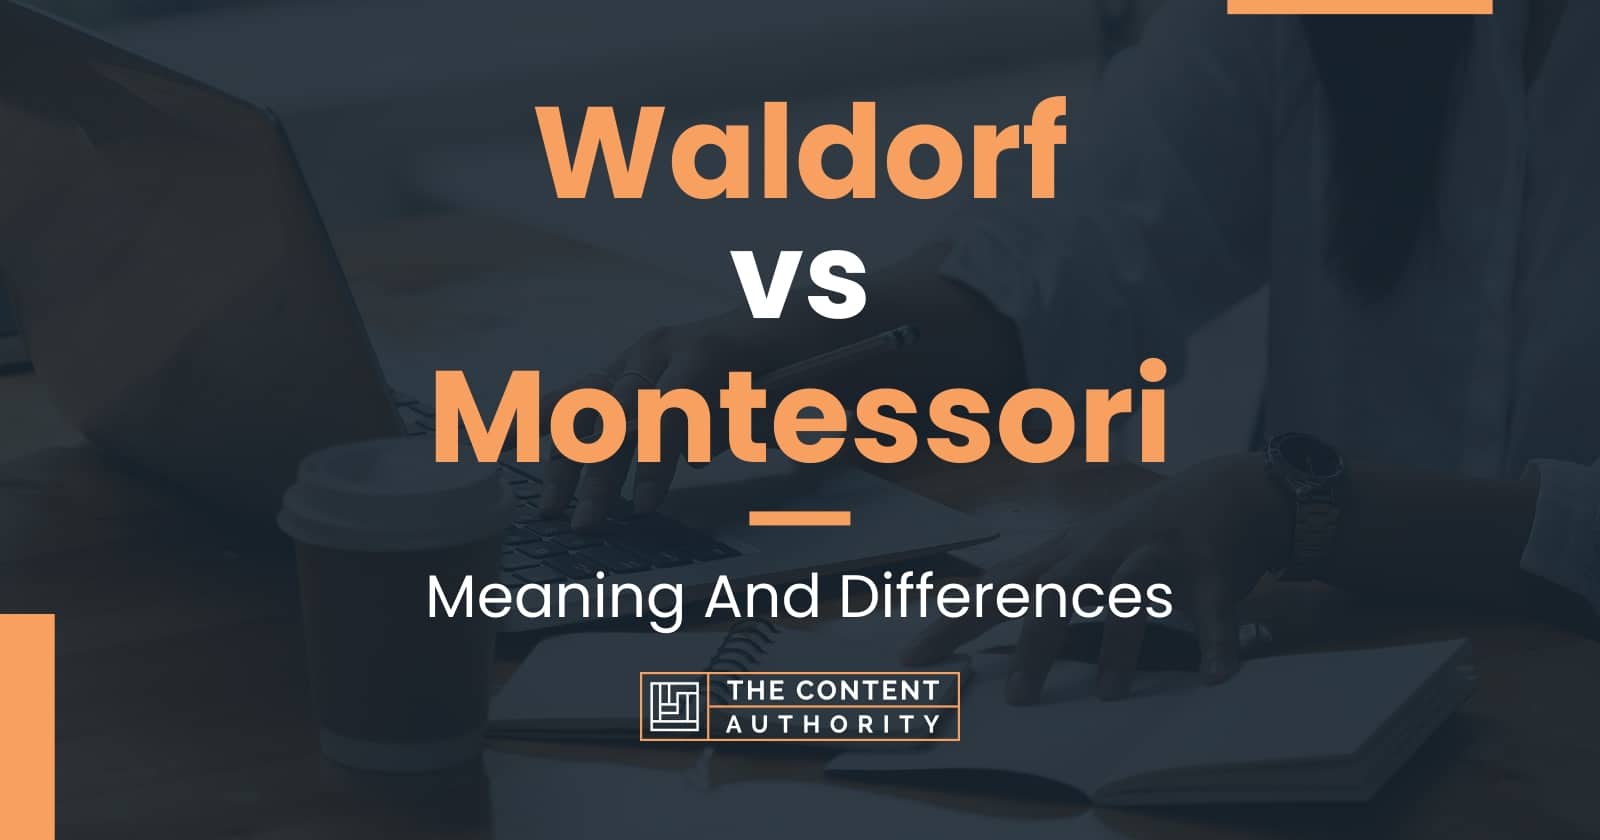 MONTESSORI VS WALDORF 